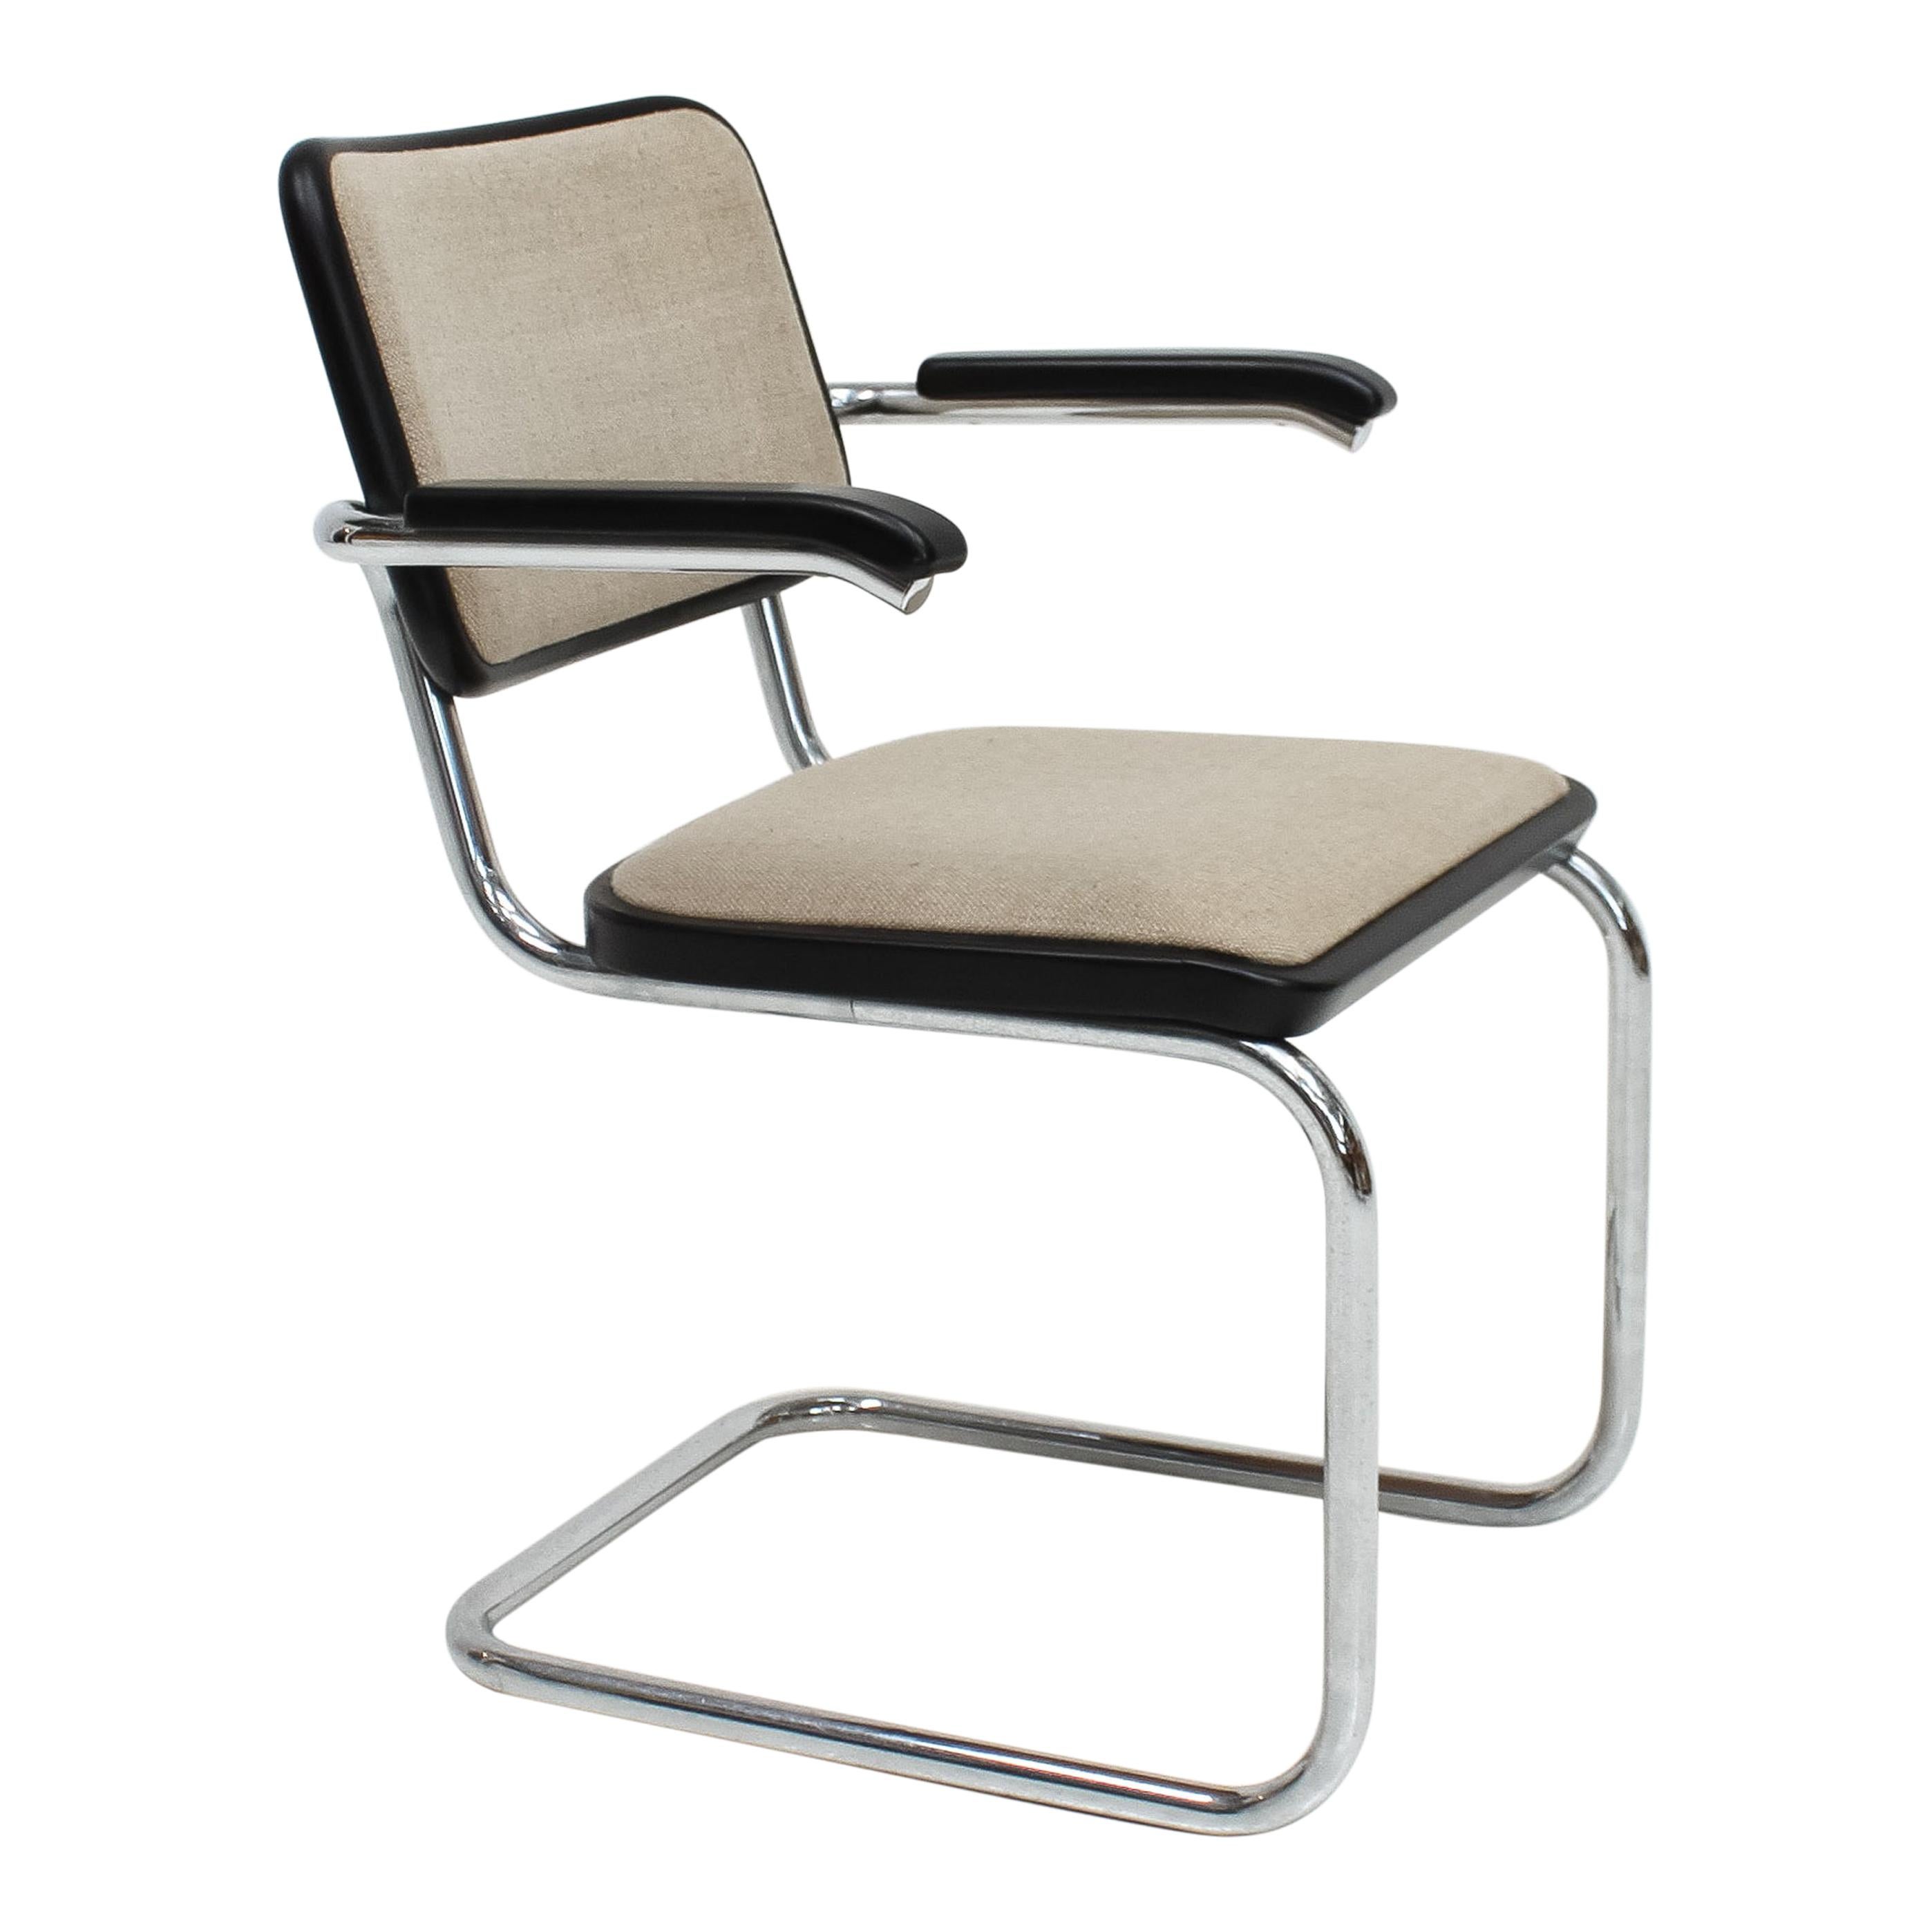 A Marcel Breuer S64 'Cesca' Chair for Thonet